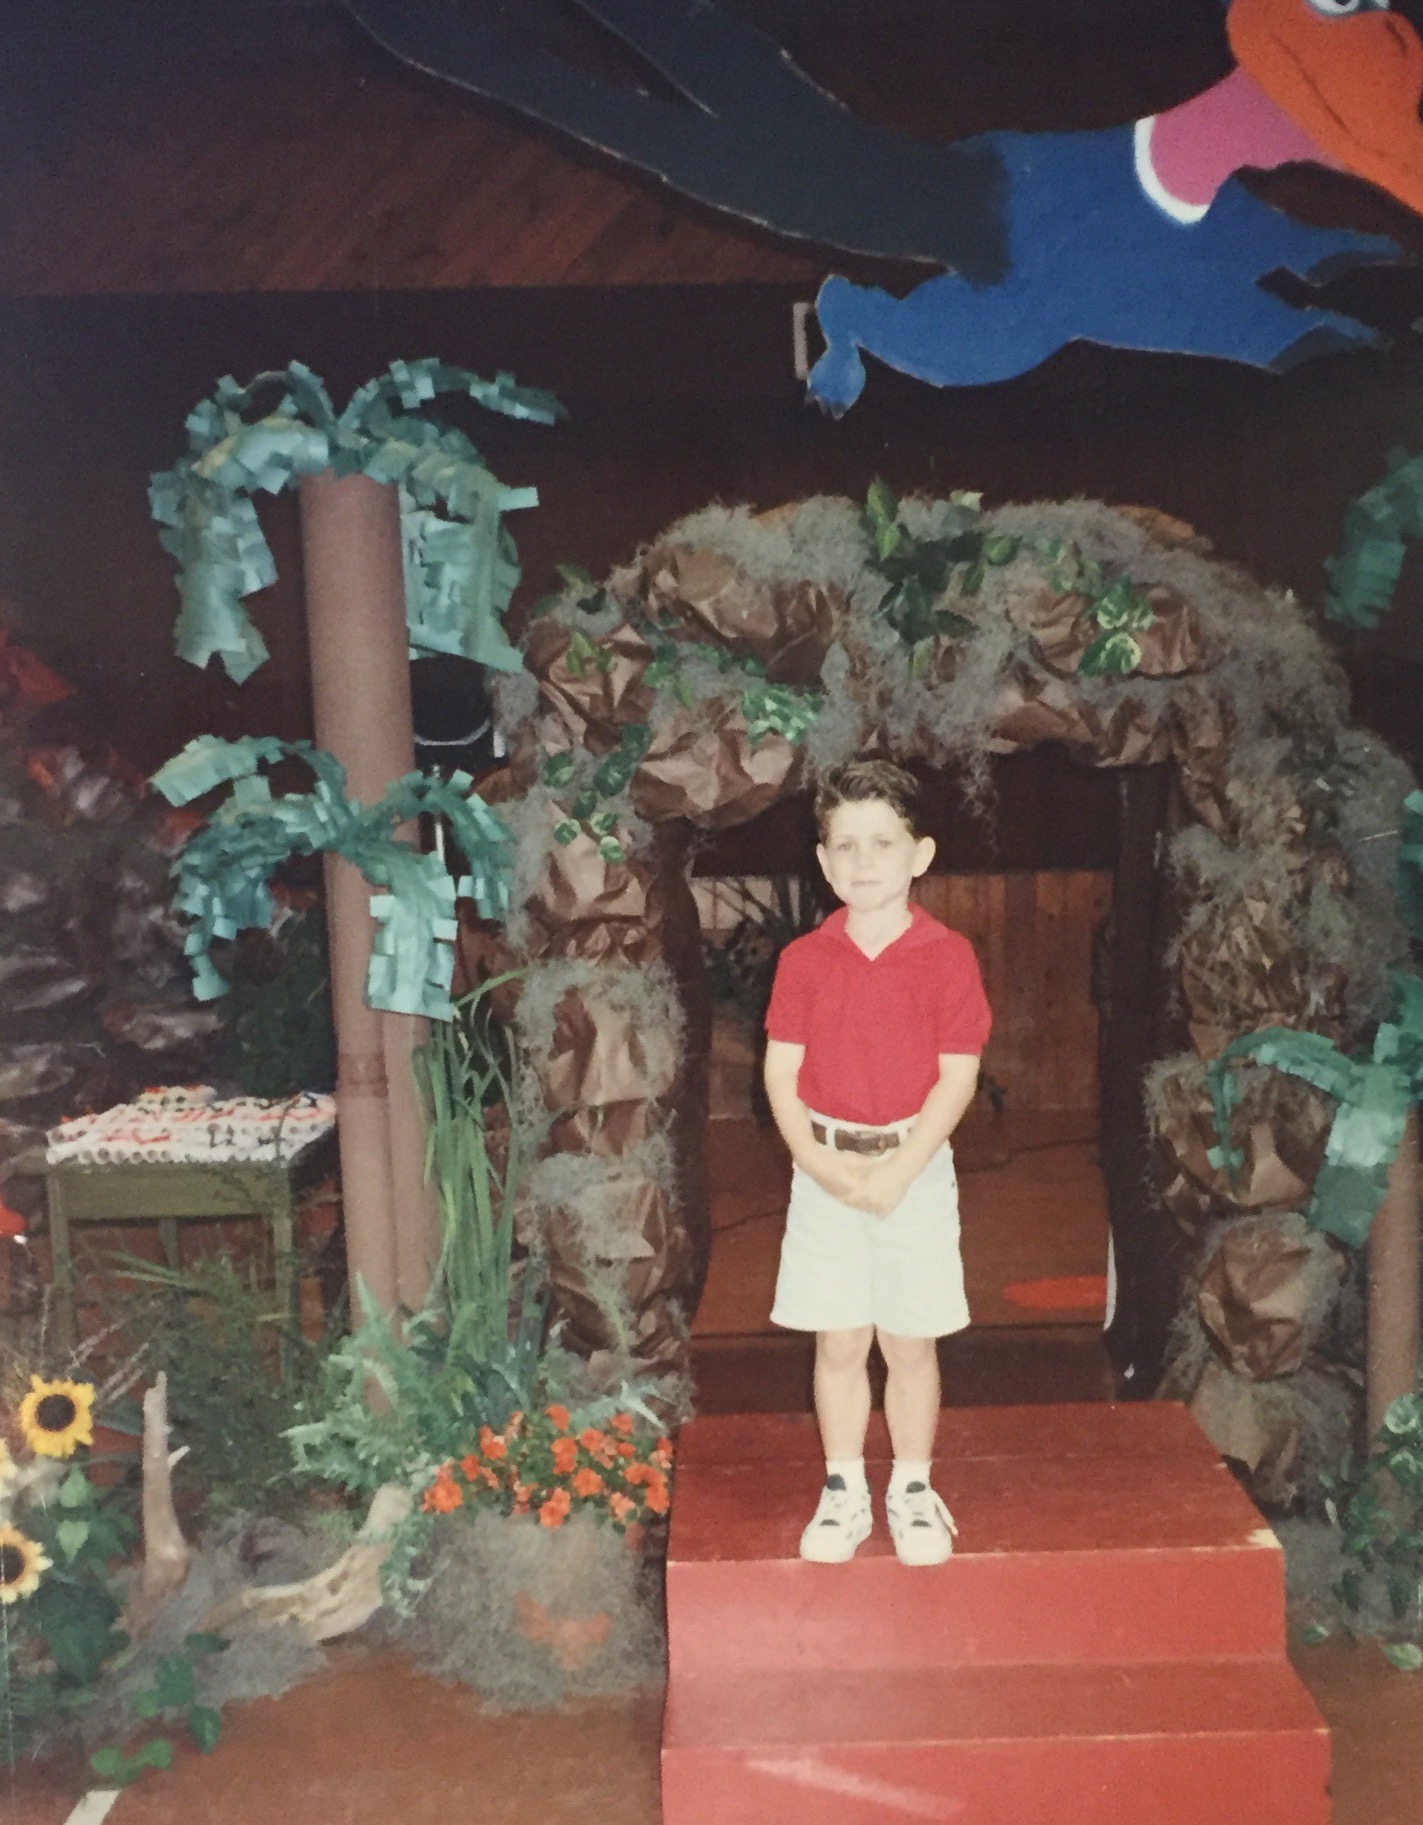 Little chancey pants-kindergarten graduation. 1993